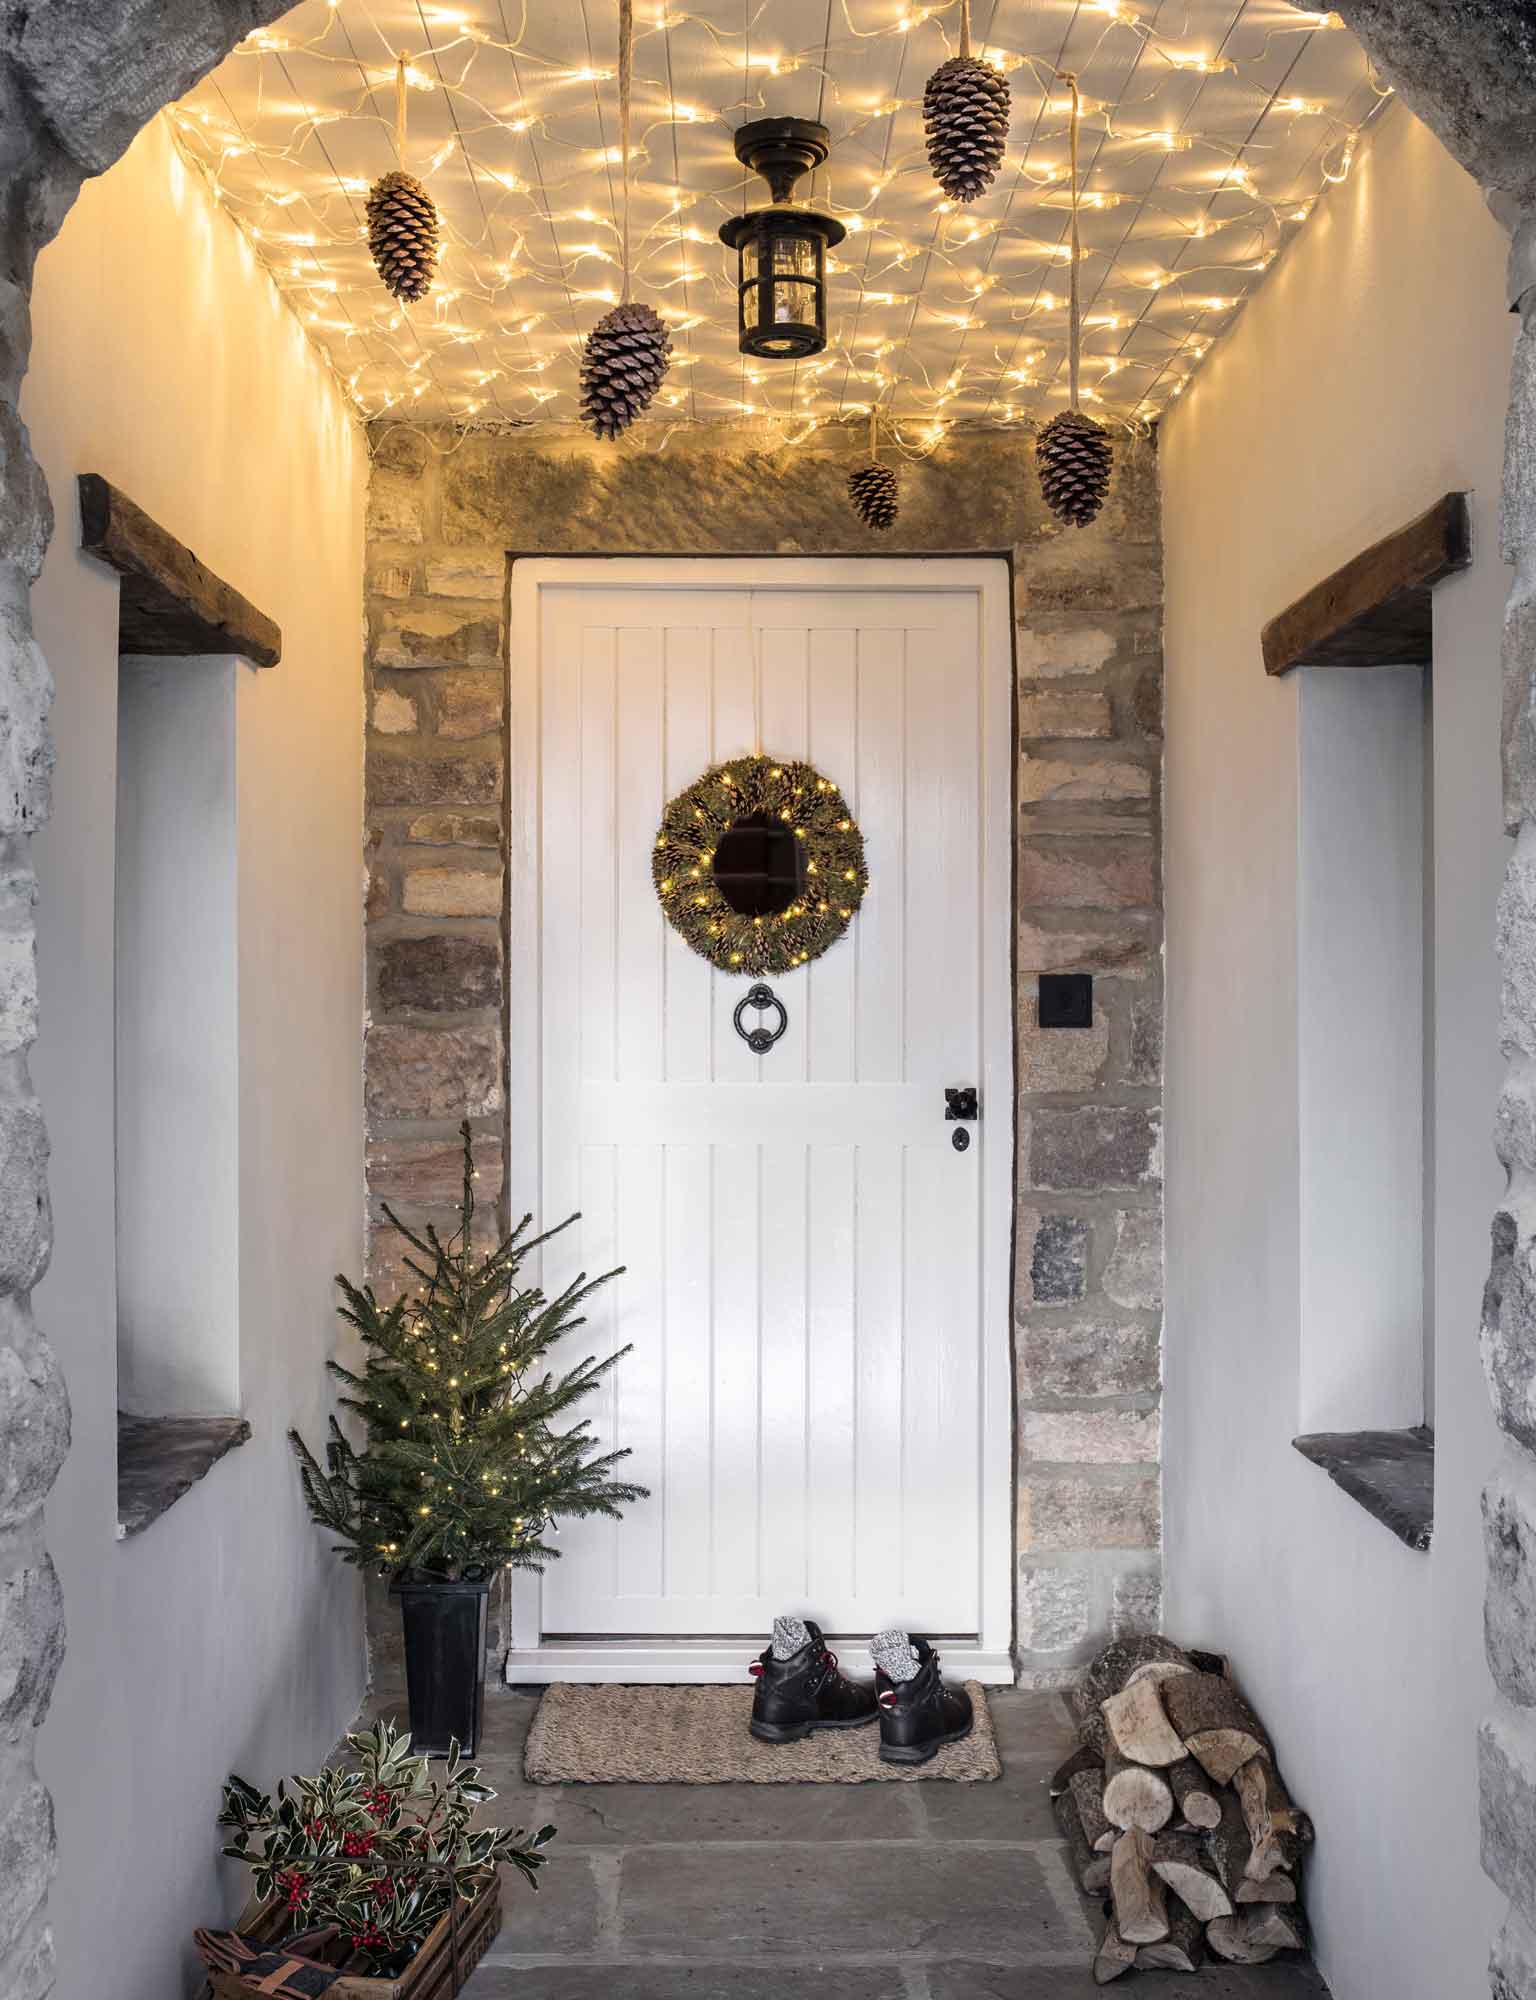 Christmas Porch & Pathway Light Ideas   Lights18fun.co.uk